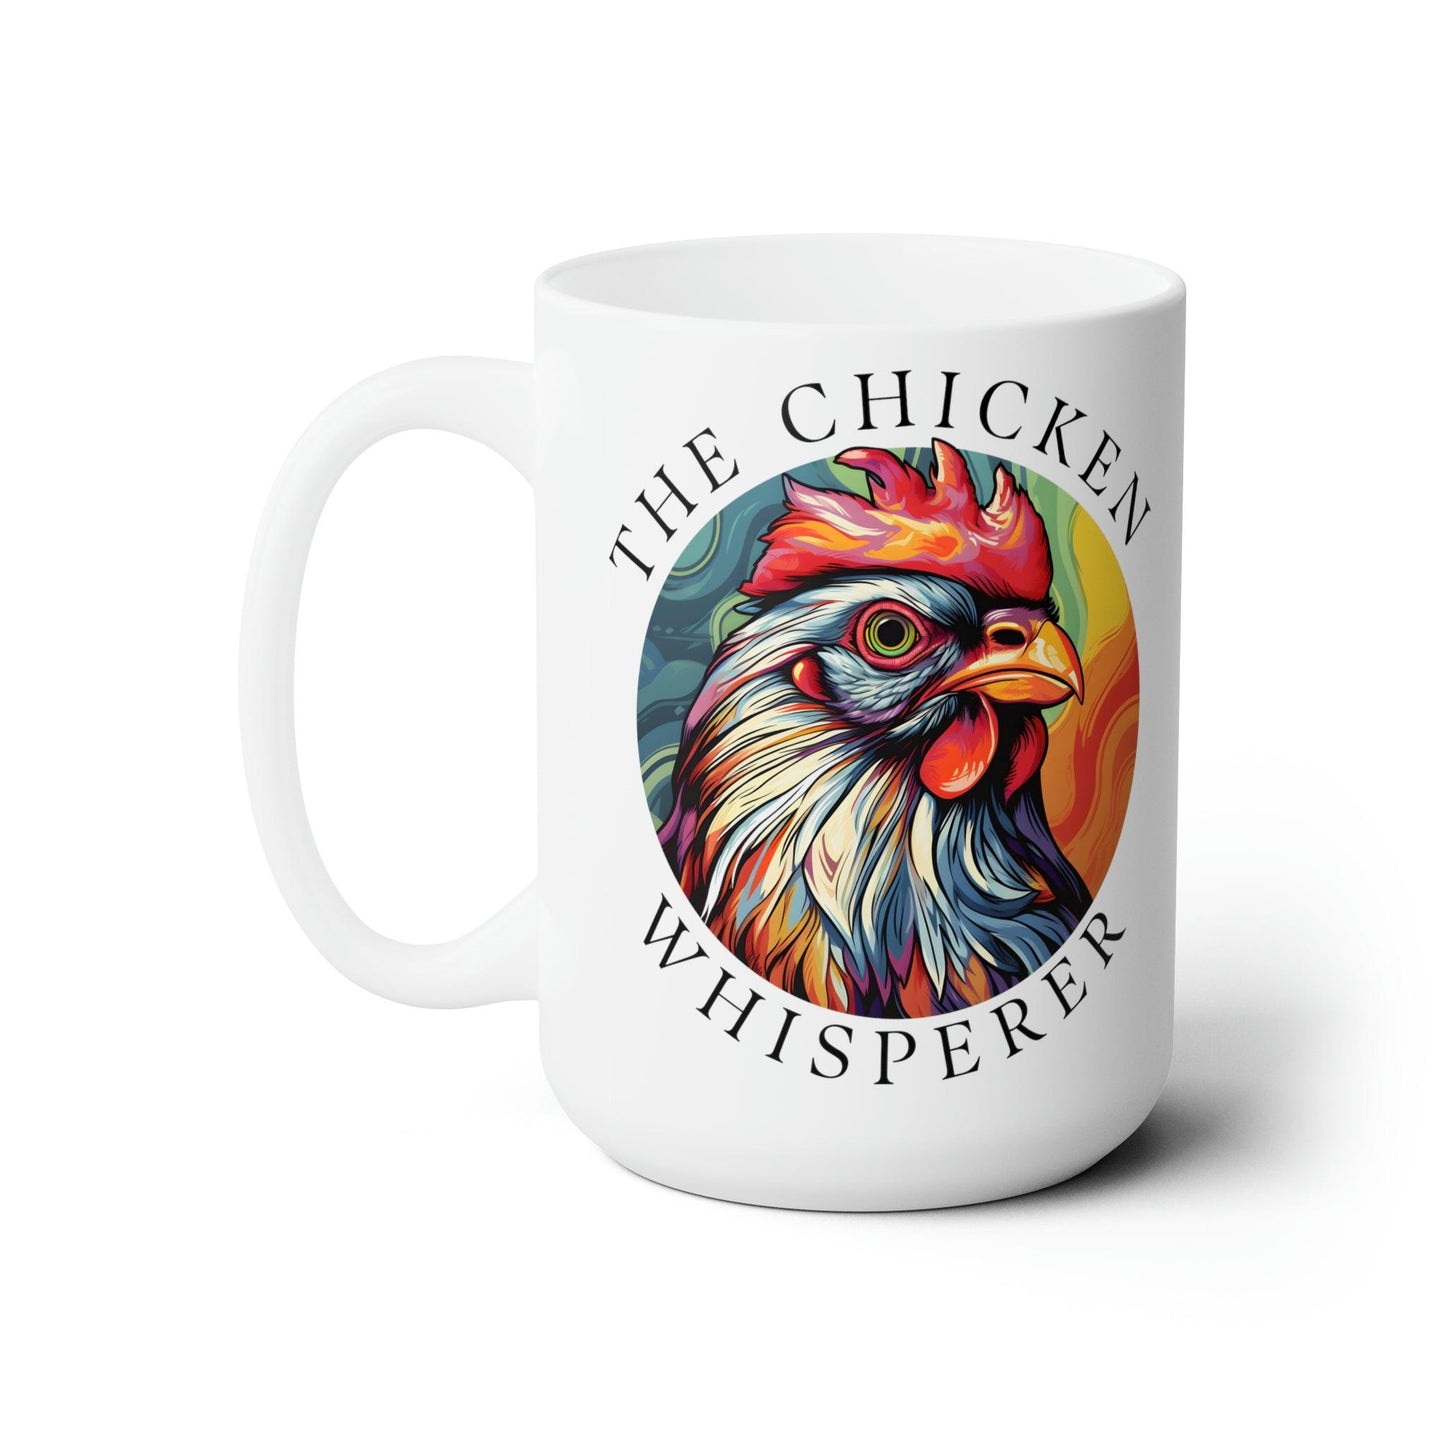 Chicken Whisperer Mug Chicken Coffee Mug Chicken lovers Mug Chicken Lover Gift for her Funny Chicken Cup Roster Mug Retro Vintage coffee Mug